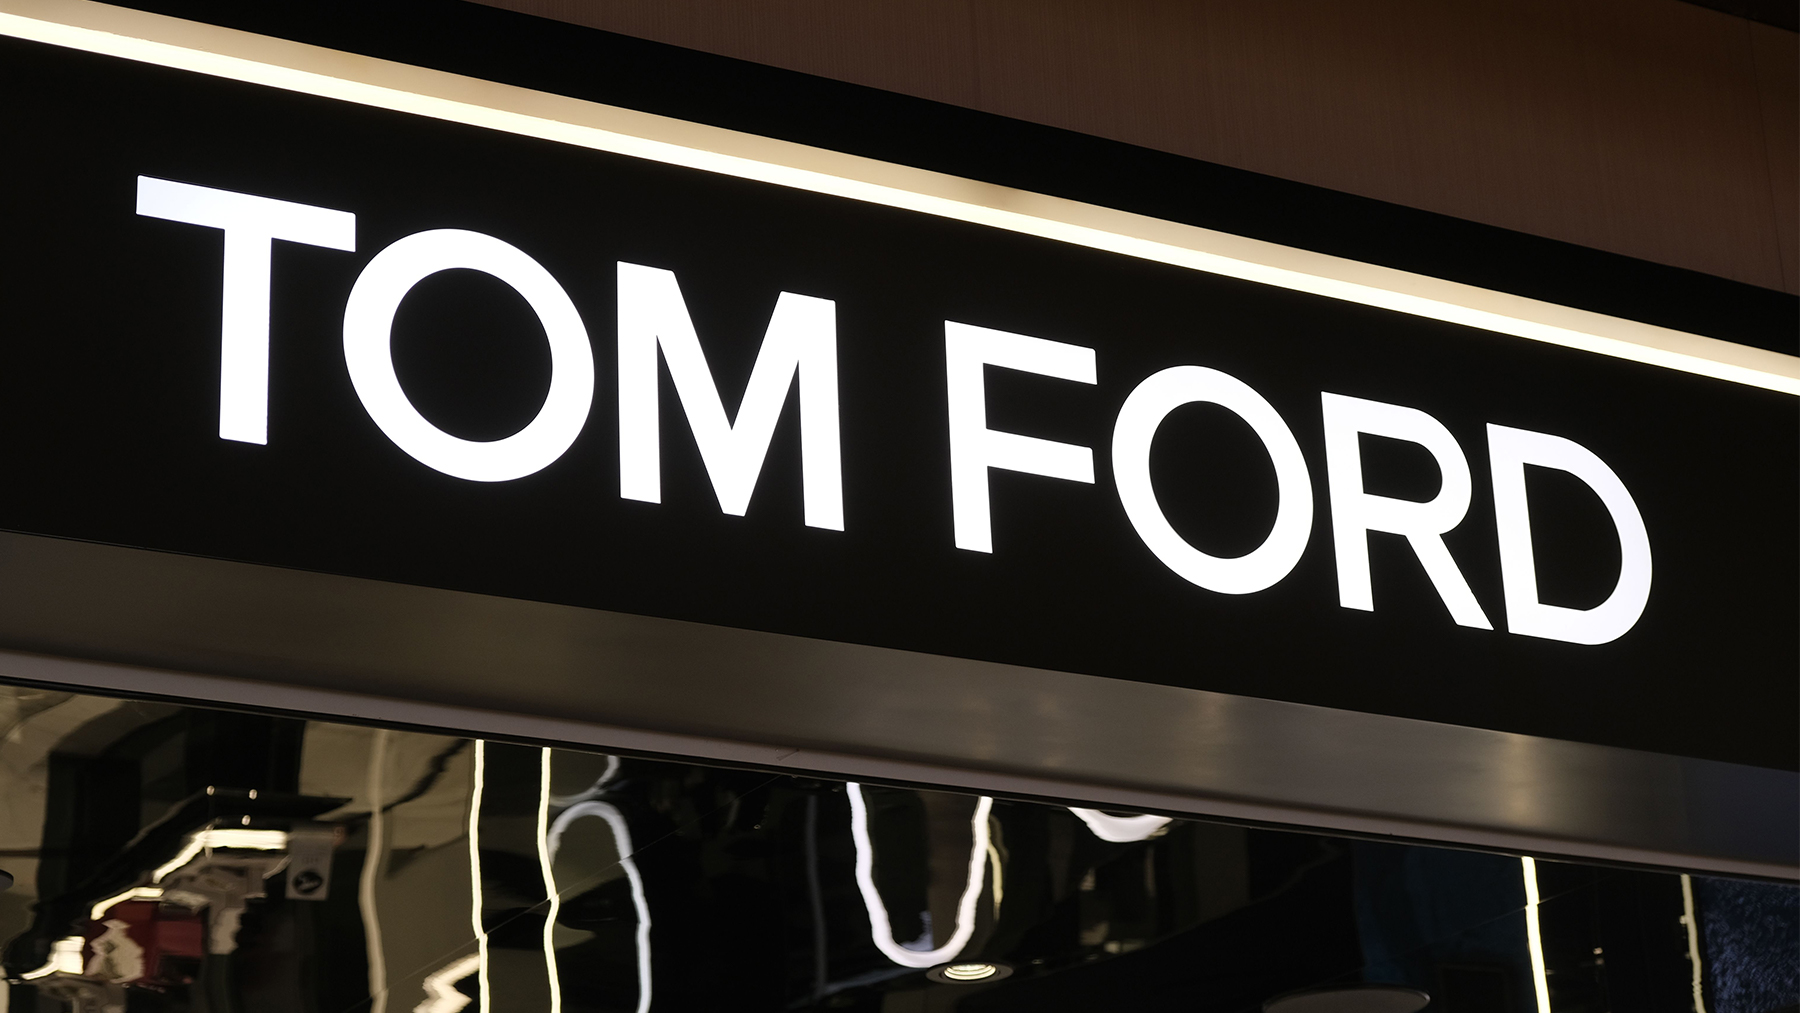 Tom Ford: Designer-Turned-Director On His Depression & More – The